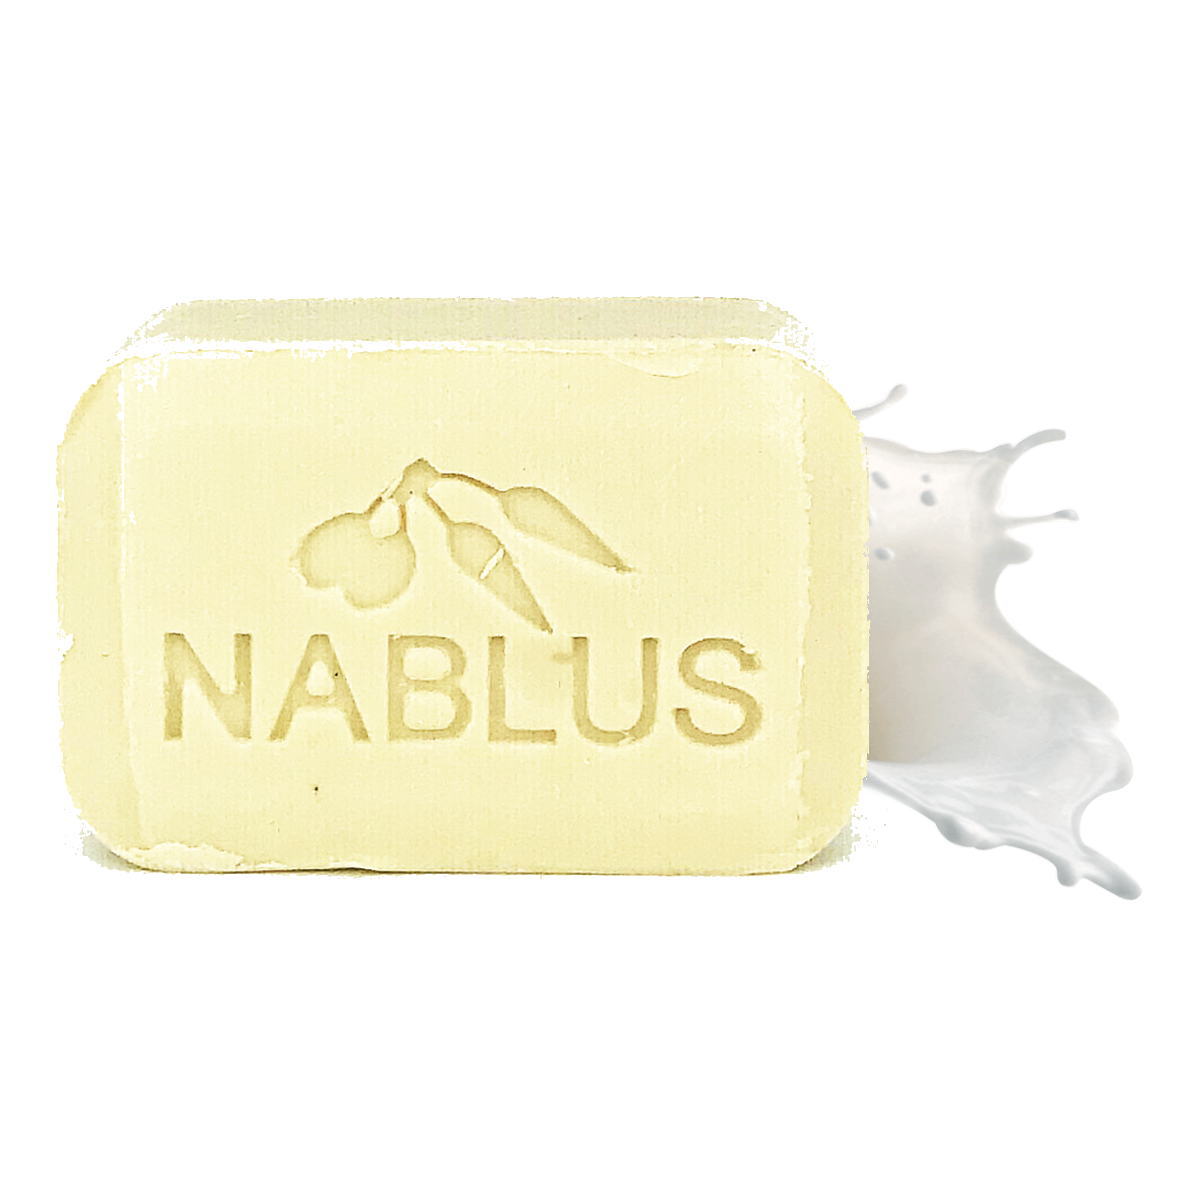 Nablus Soap ナーブルスソープ – 山羊ミルク – 無添加 オーガニック石鹸